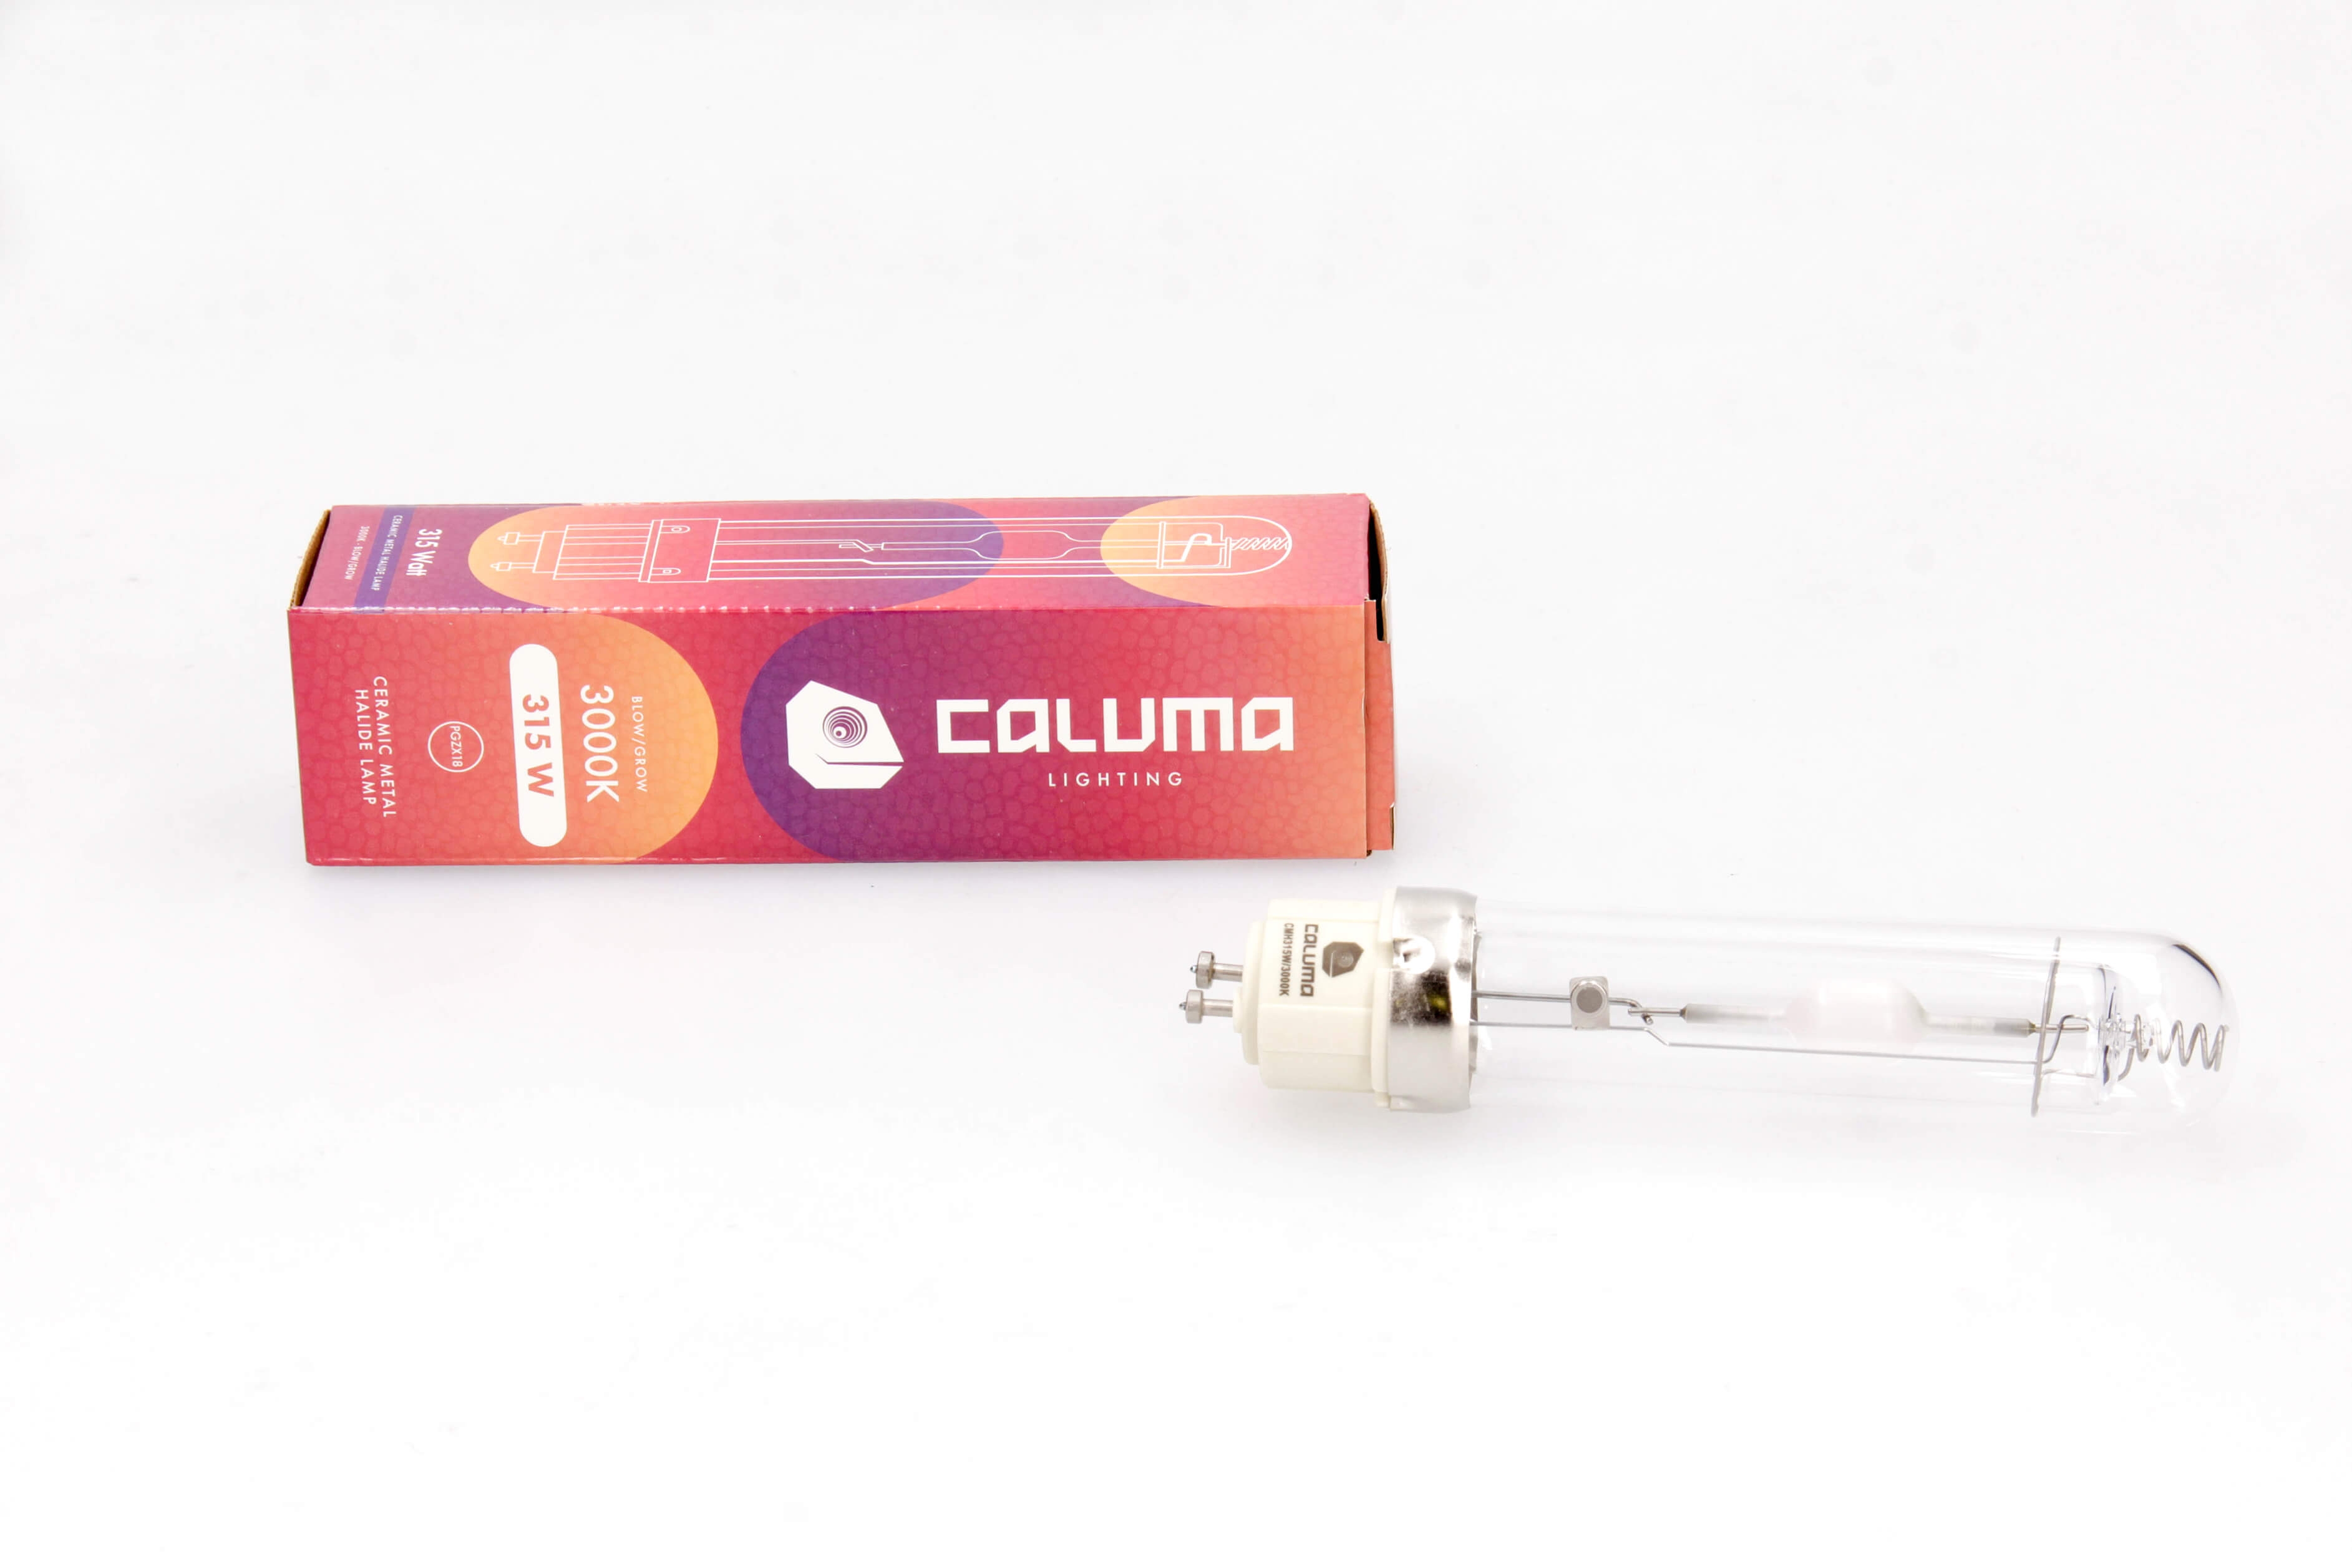 Caluma CMH Leuchtmittel, Keramik-Metall-Halogen-Lampen, 315W, 3000K